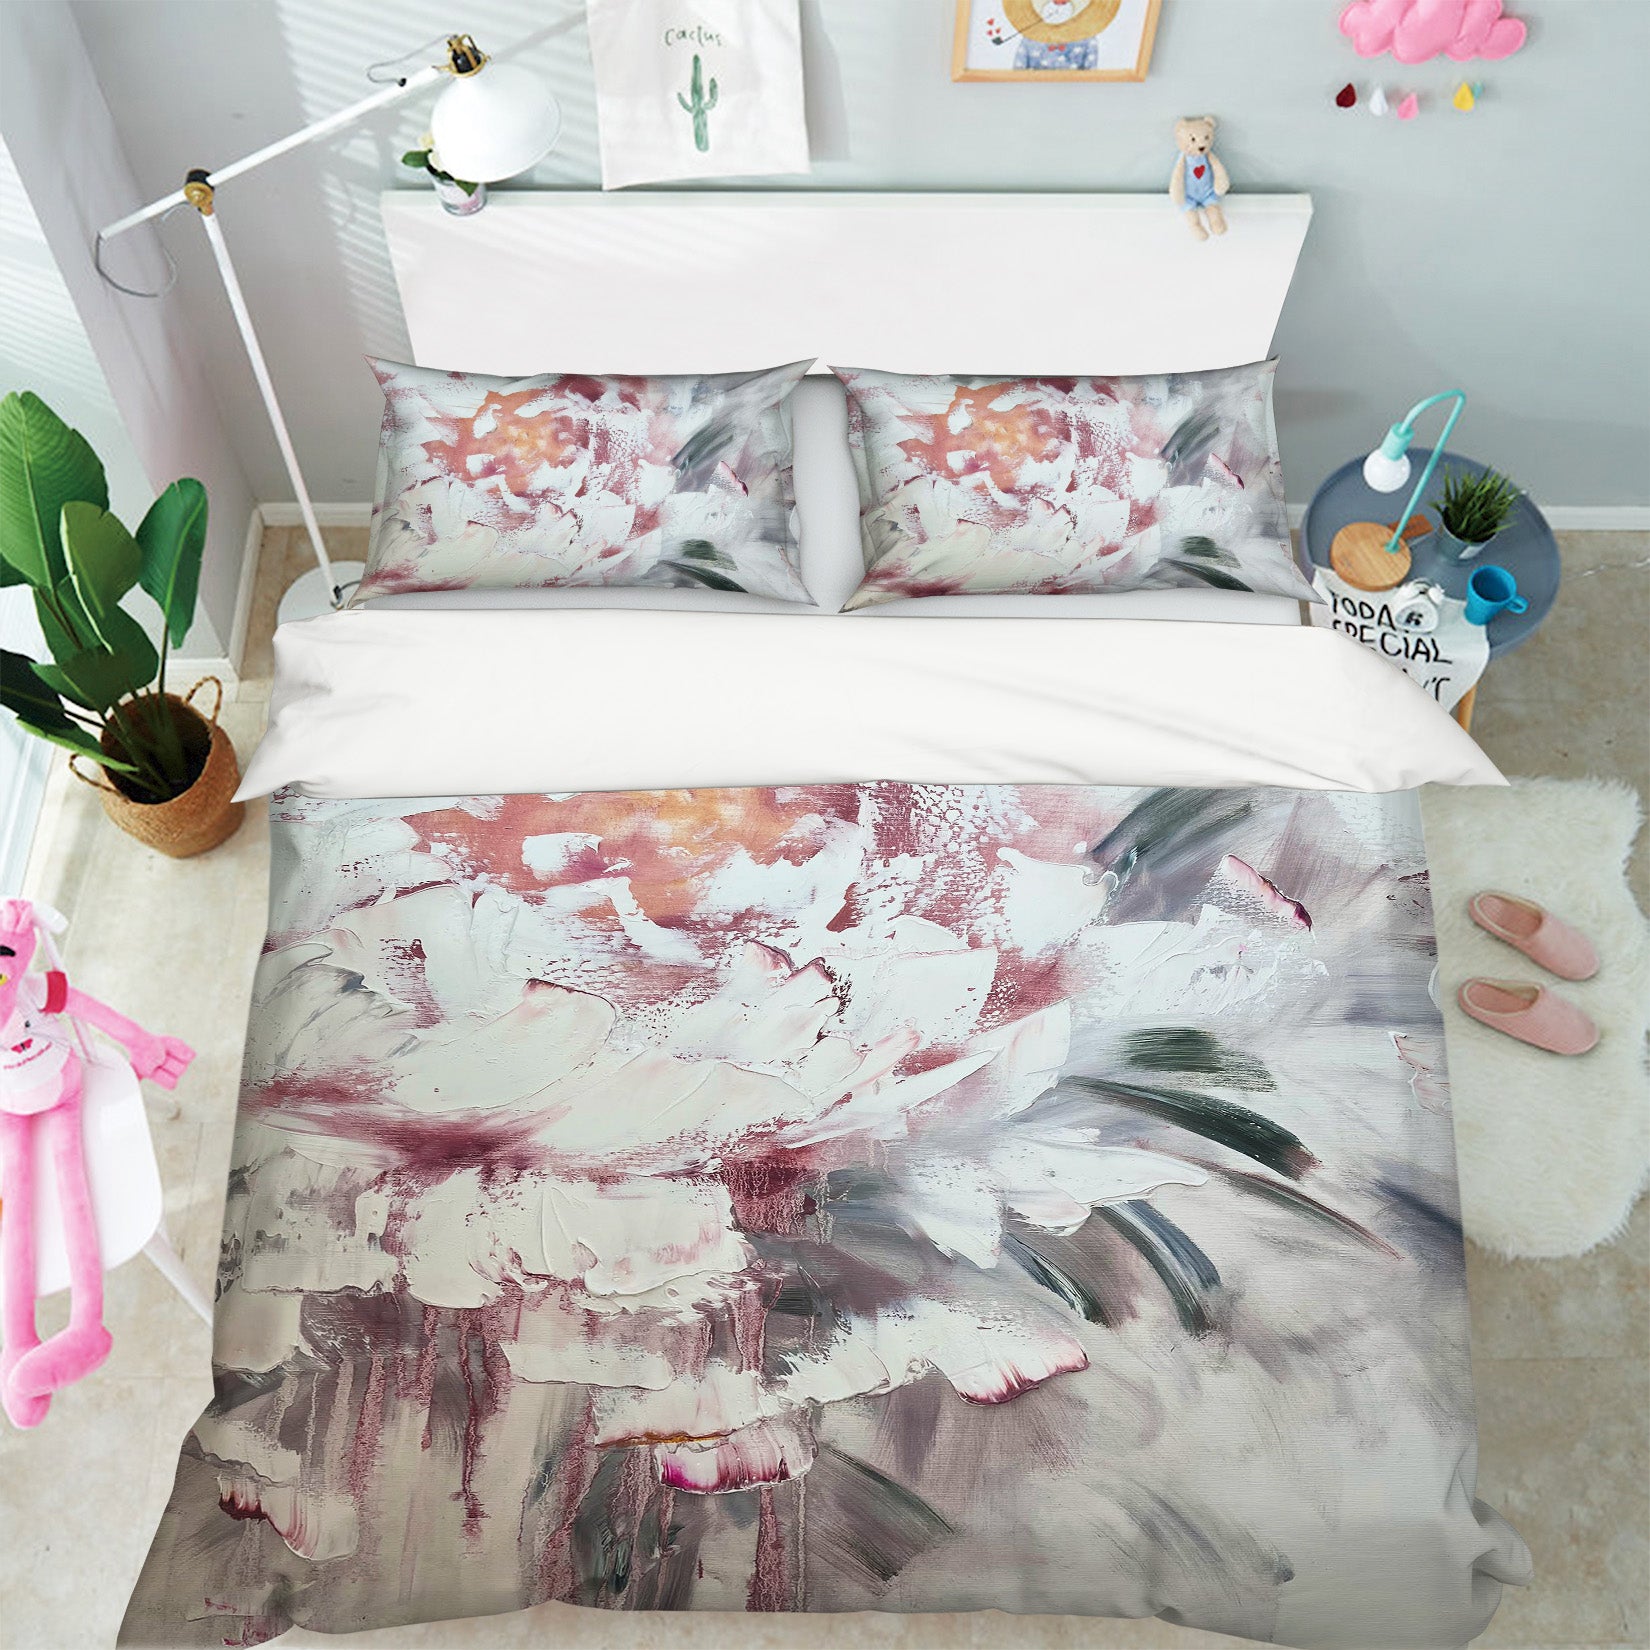 3D Beautiful Flower 3141 Skromova Marina Bedding Bed Pillowcases Quilt Cover Duvet Cover